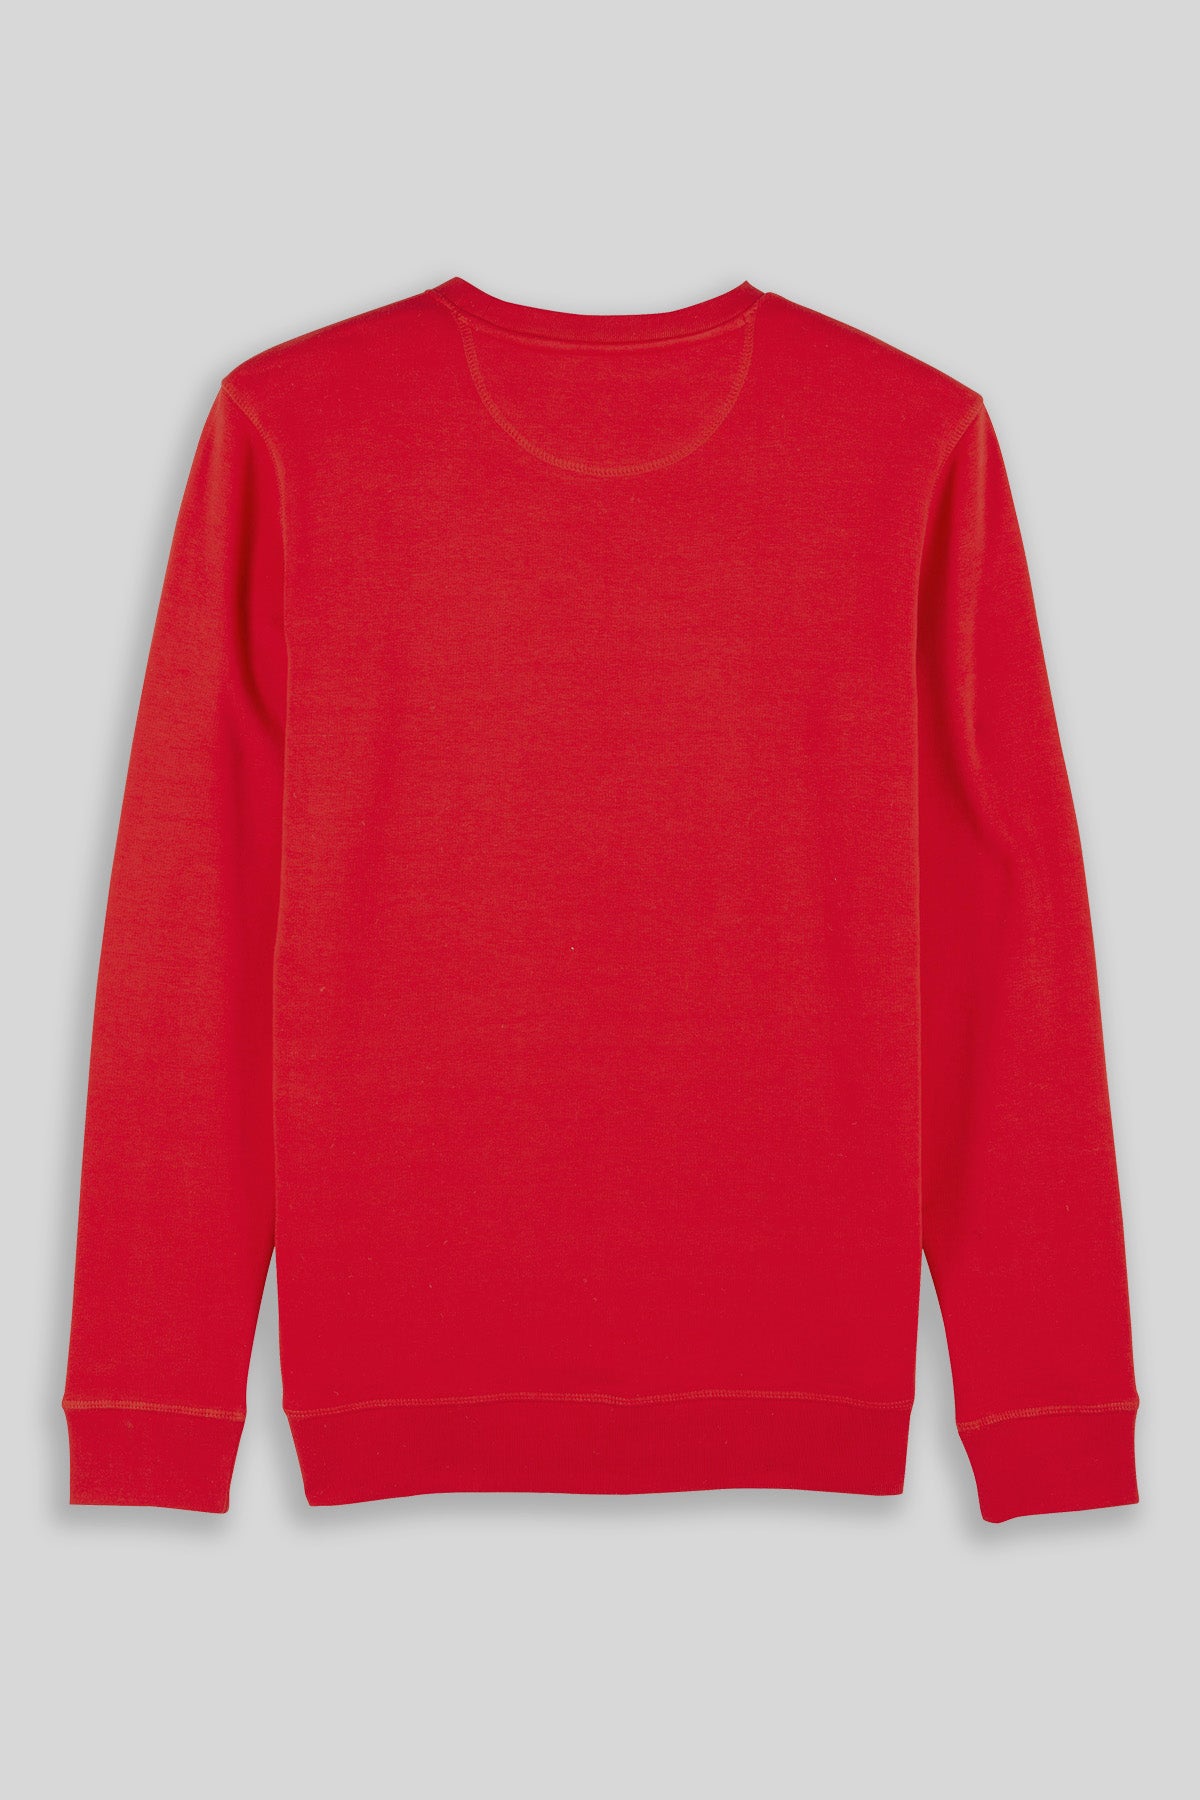 EDEN ASHRAM Yoga Punk Varsity Organic Sweatshirt - Red